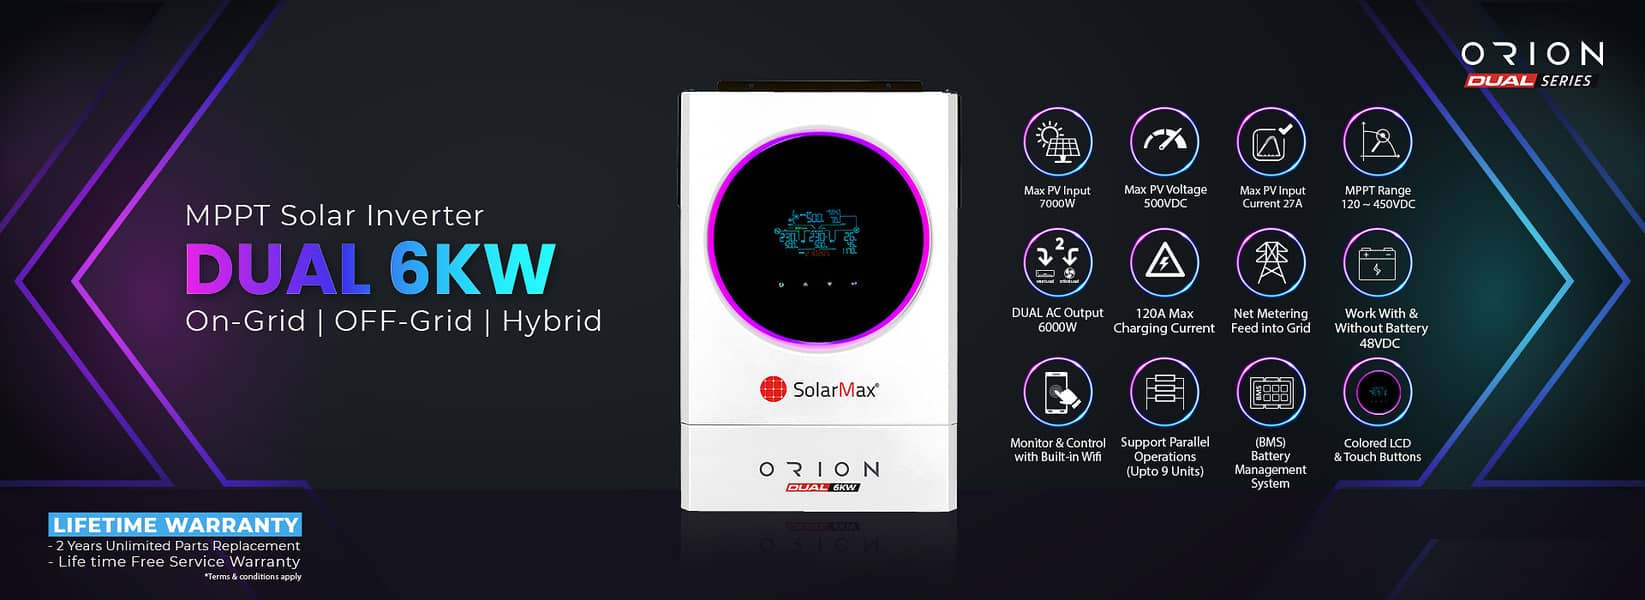 SolarMax Orion Dual 6kW Hybrid Inverter 1